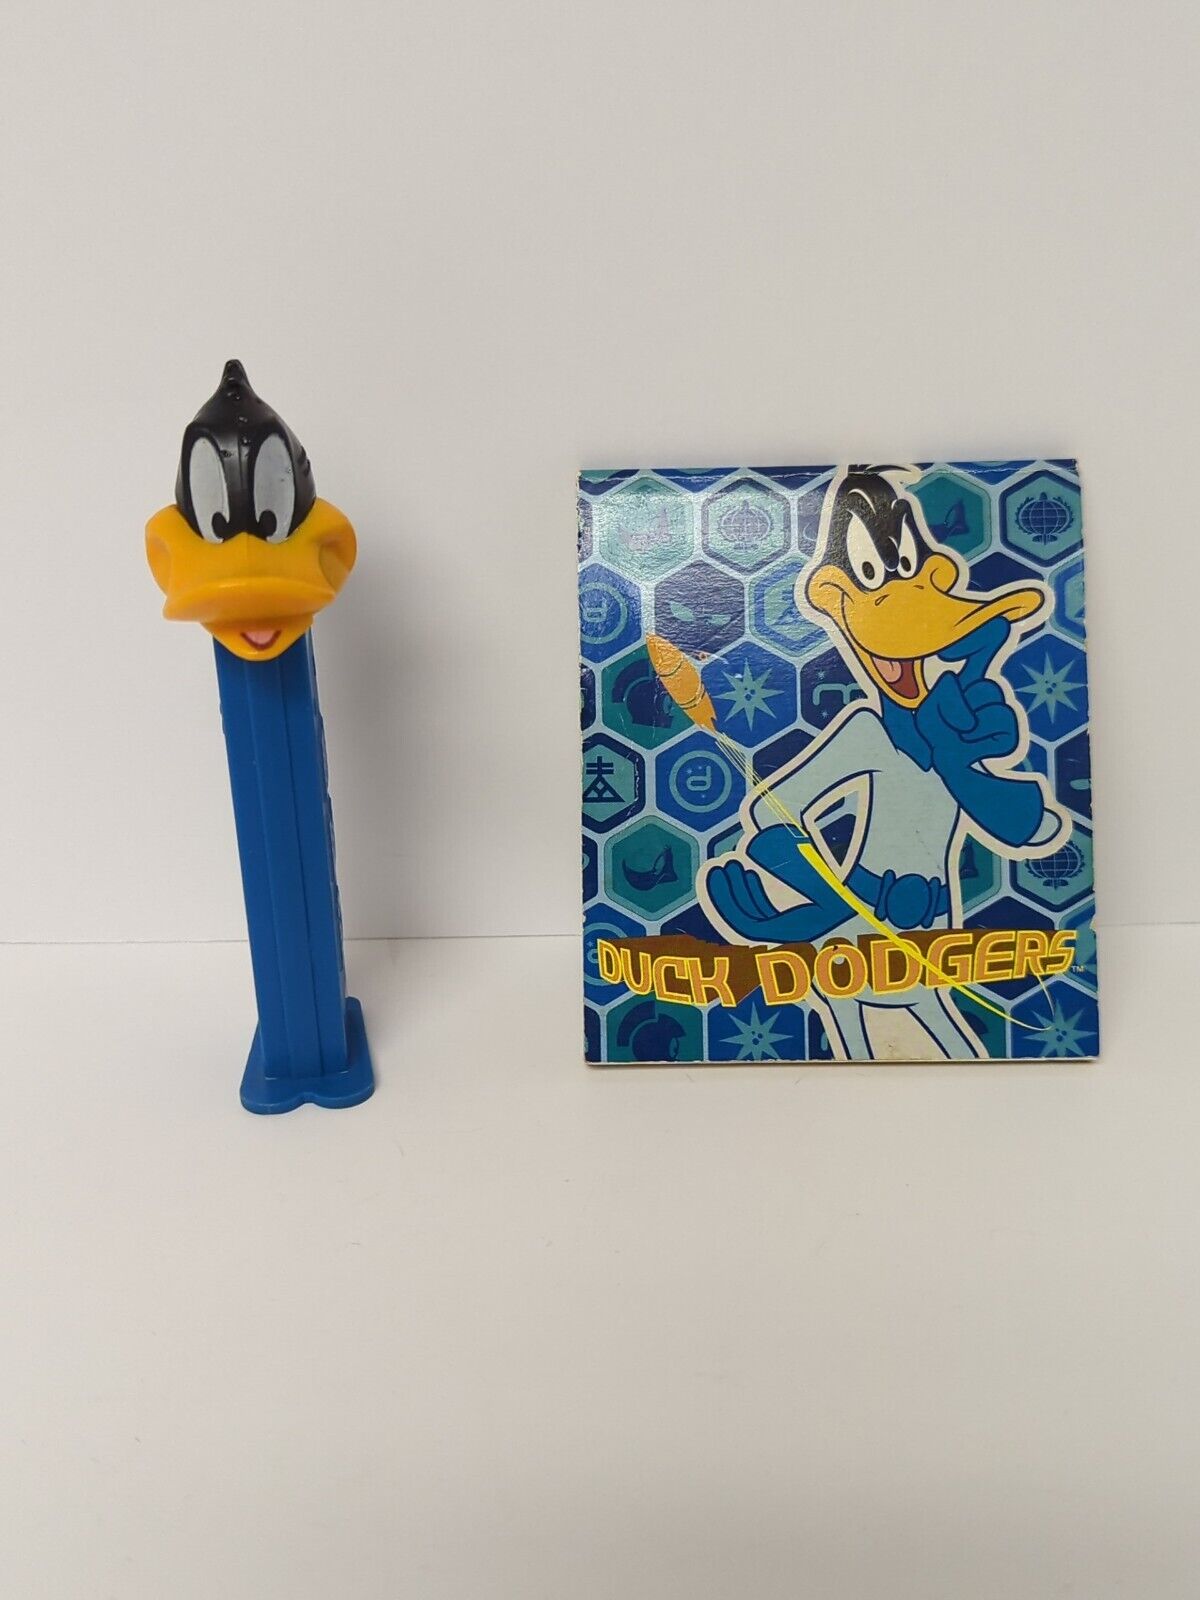 1993 Warner Bros Looney Tunes Daffy Duck PEZ dispenser and duck dodgers notebook